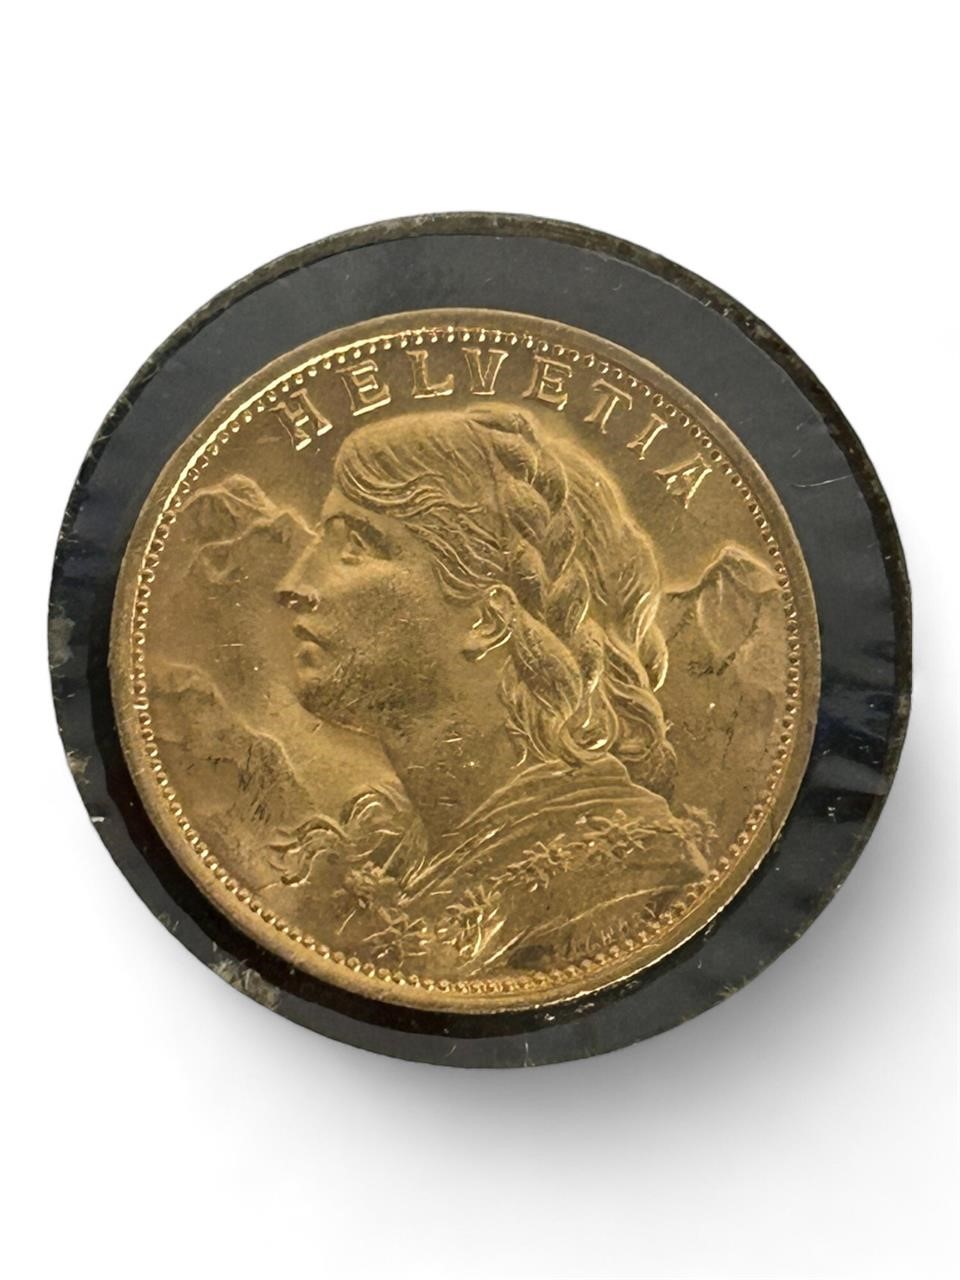 1935 B Swiss 20 Franc Gold Coin